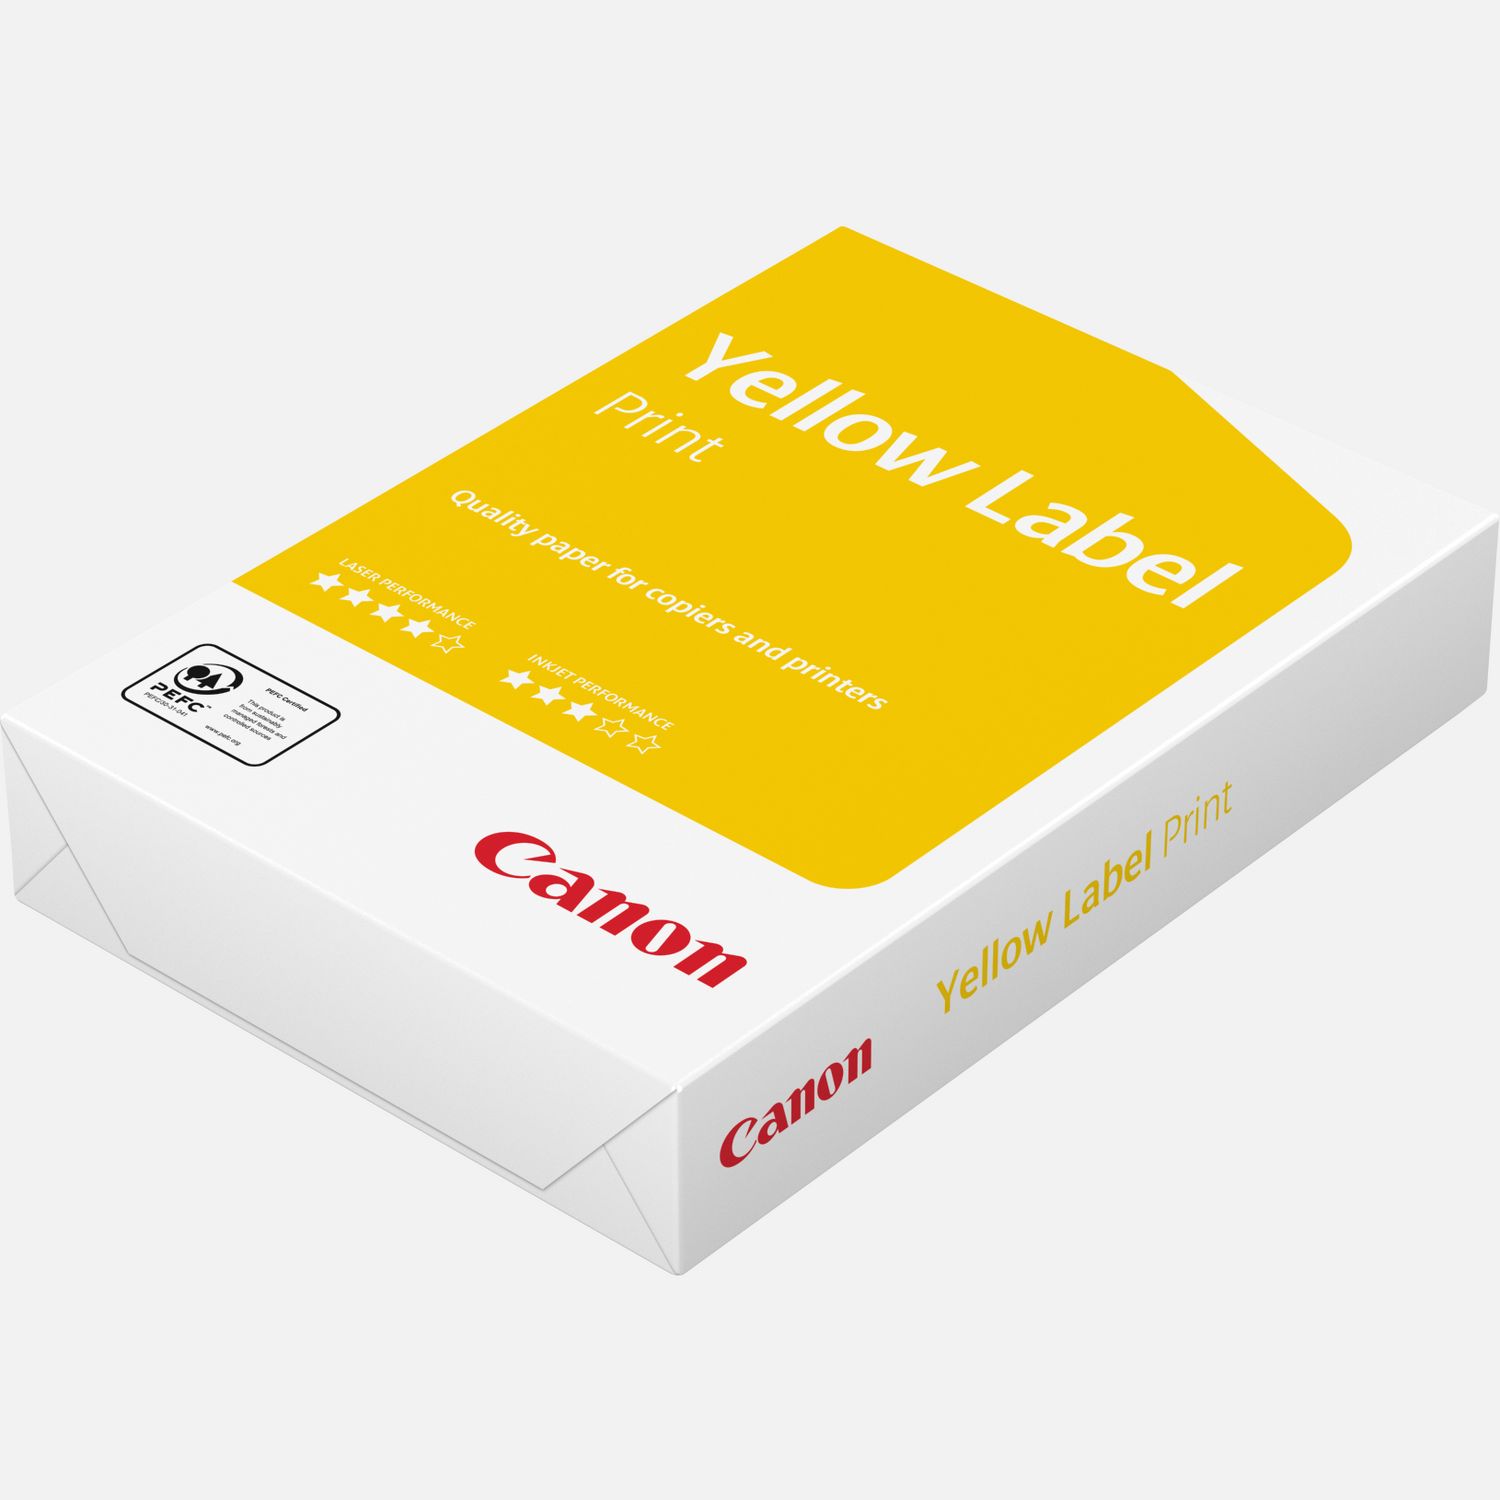 Canon Yellow g/m² A4 papier – 500 vel — Canon Nederland Store